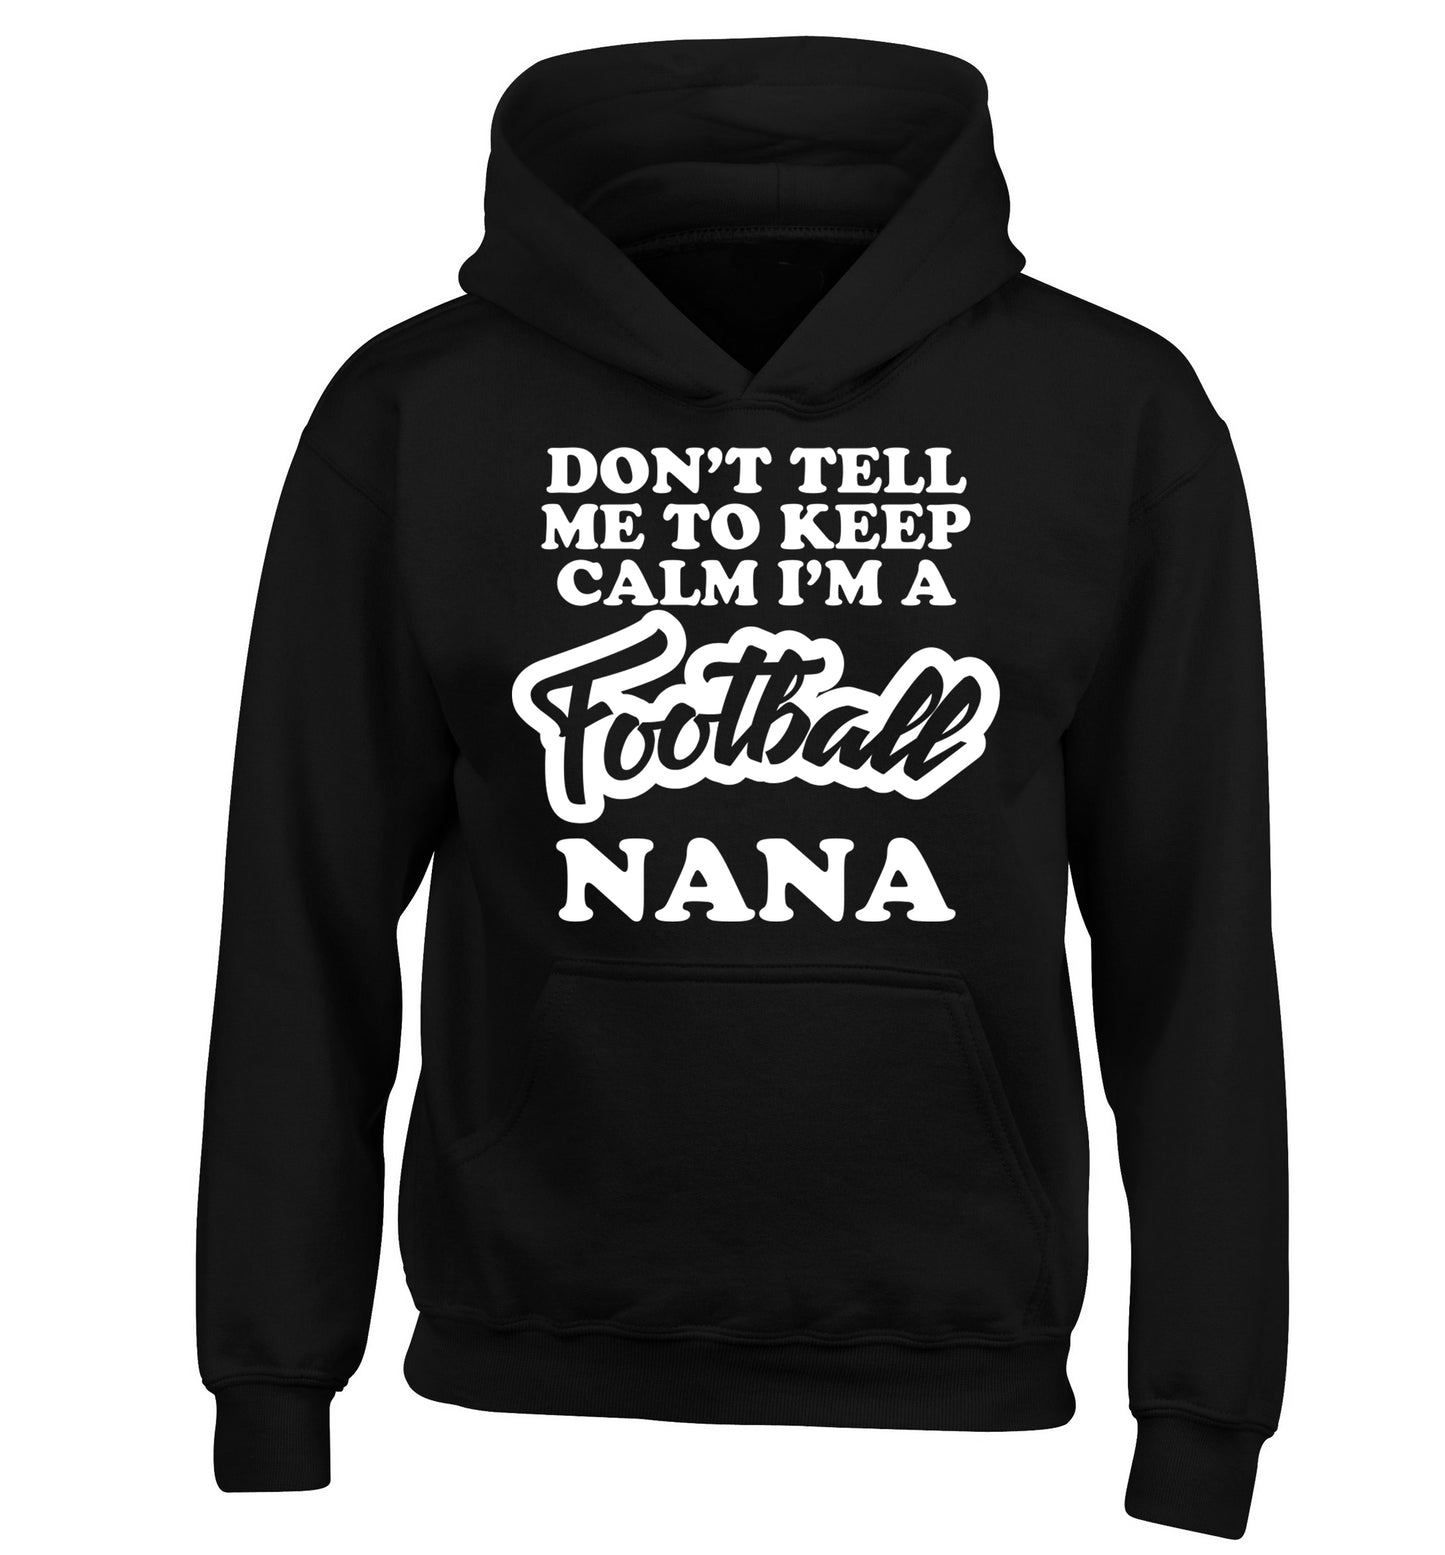 Don't tell me to keep calm I'm a football nana children's black hoodie 12-14 Years